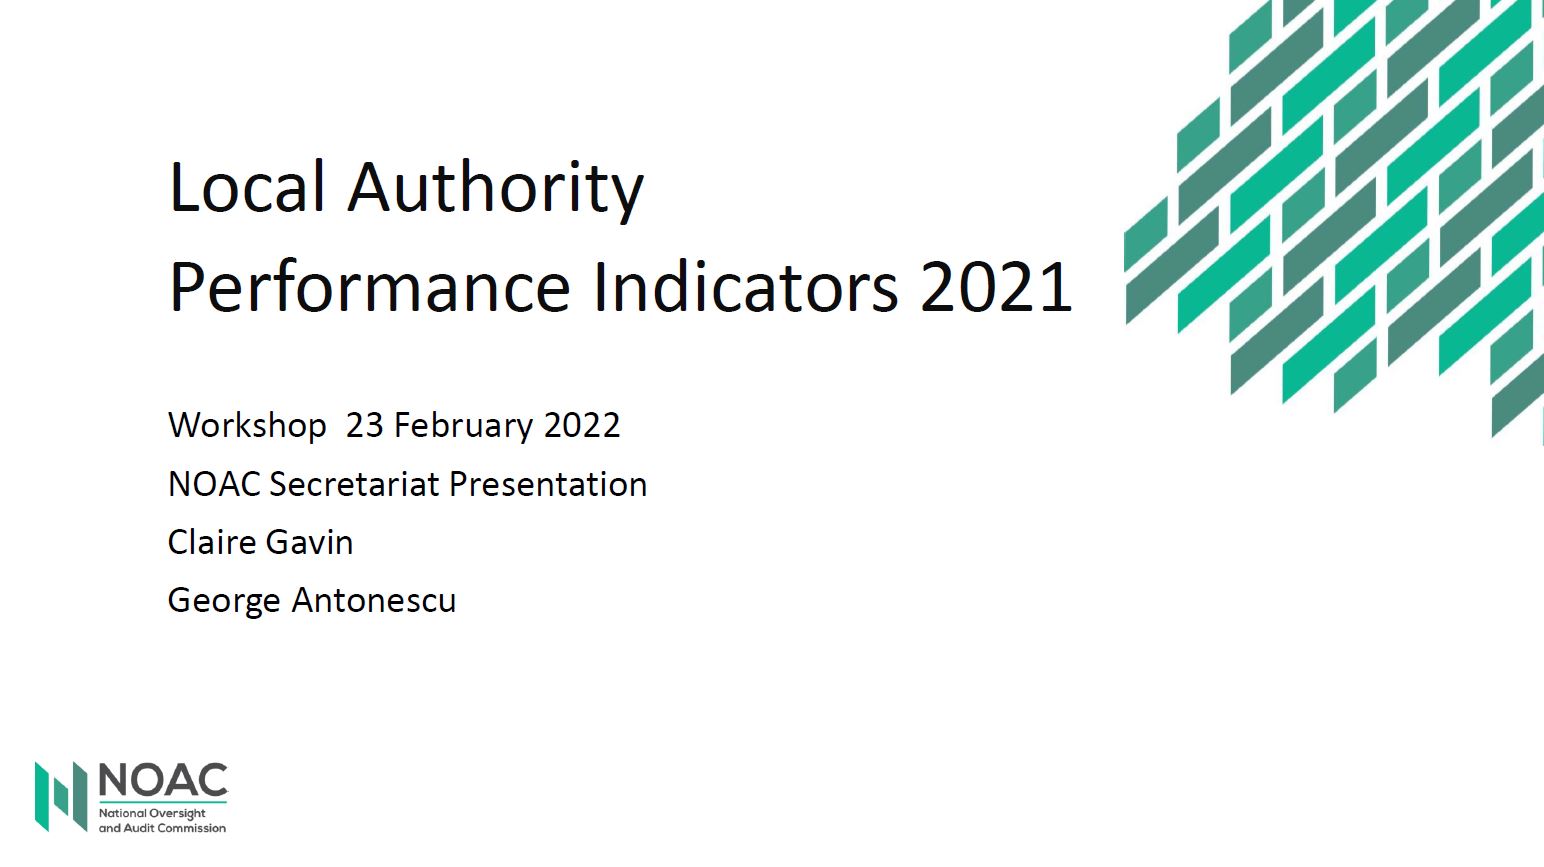 Local Authority Performance Indicators 2021